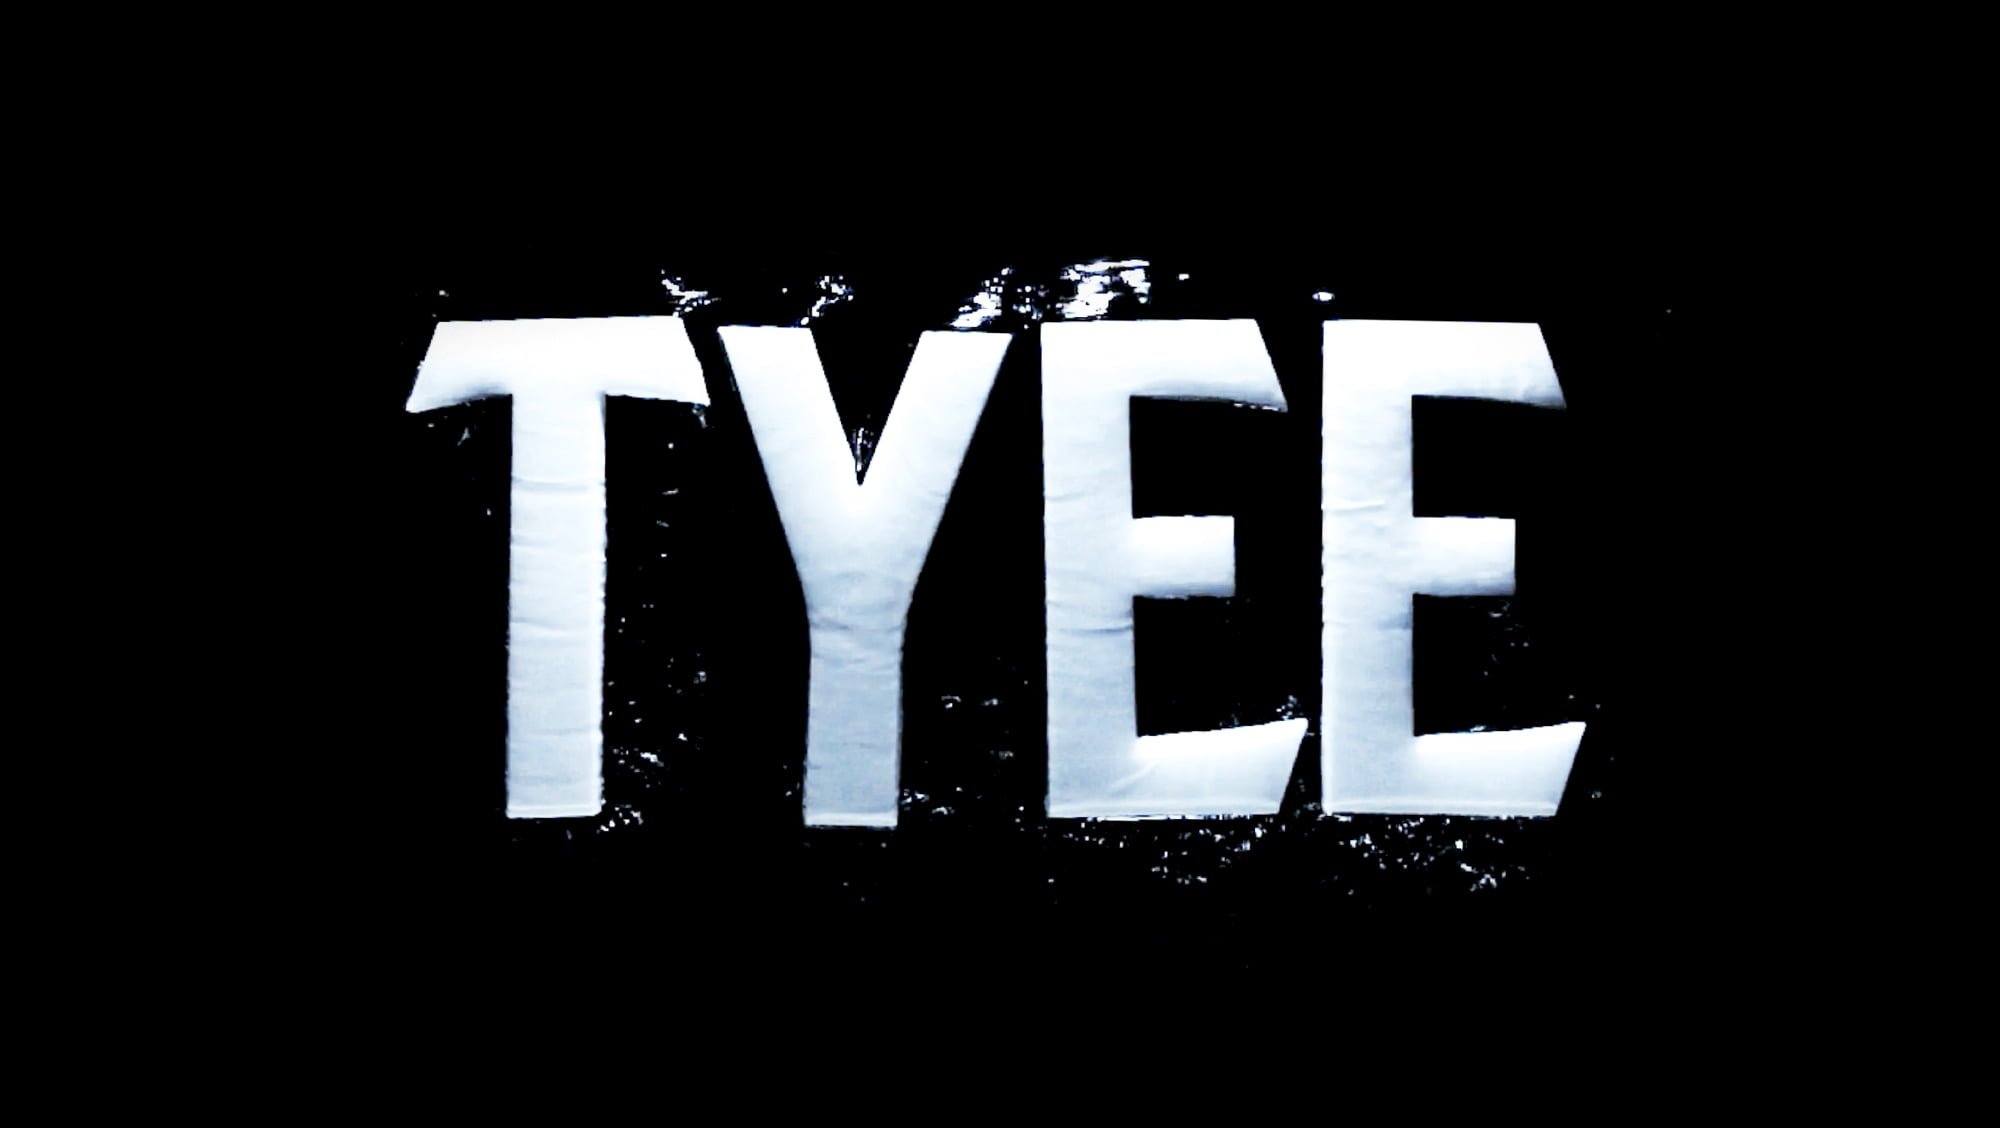 Image of Tyee logo development